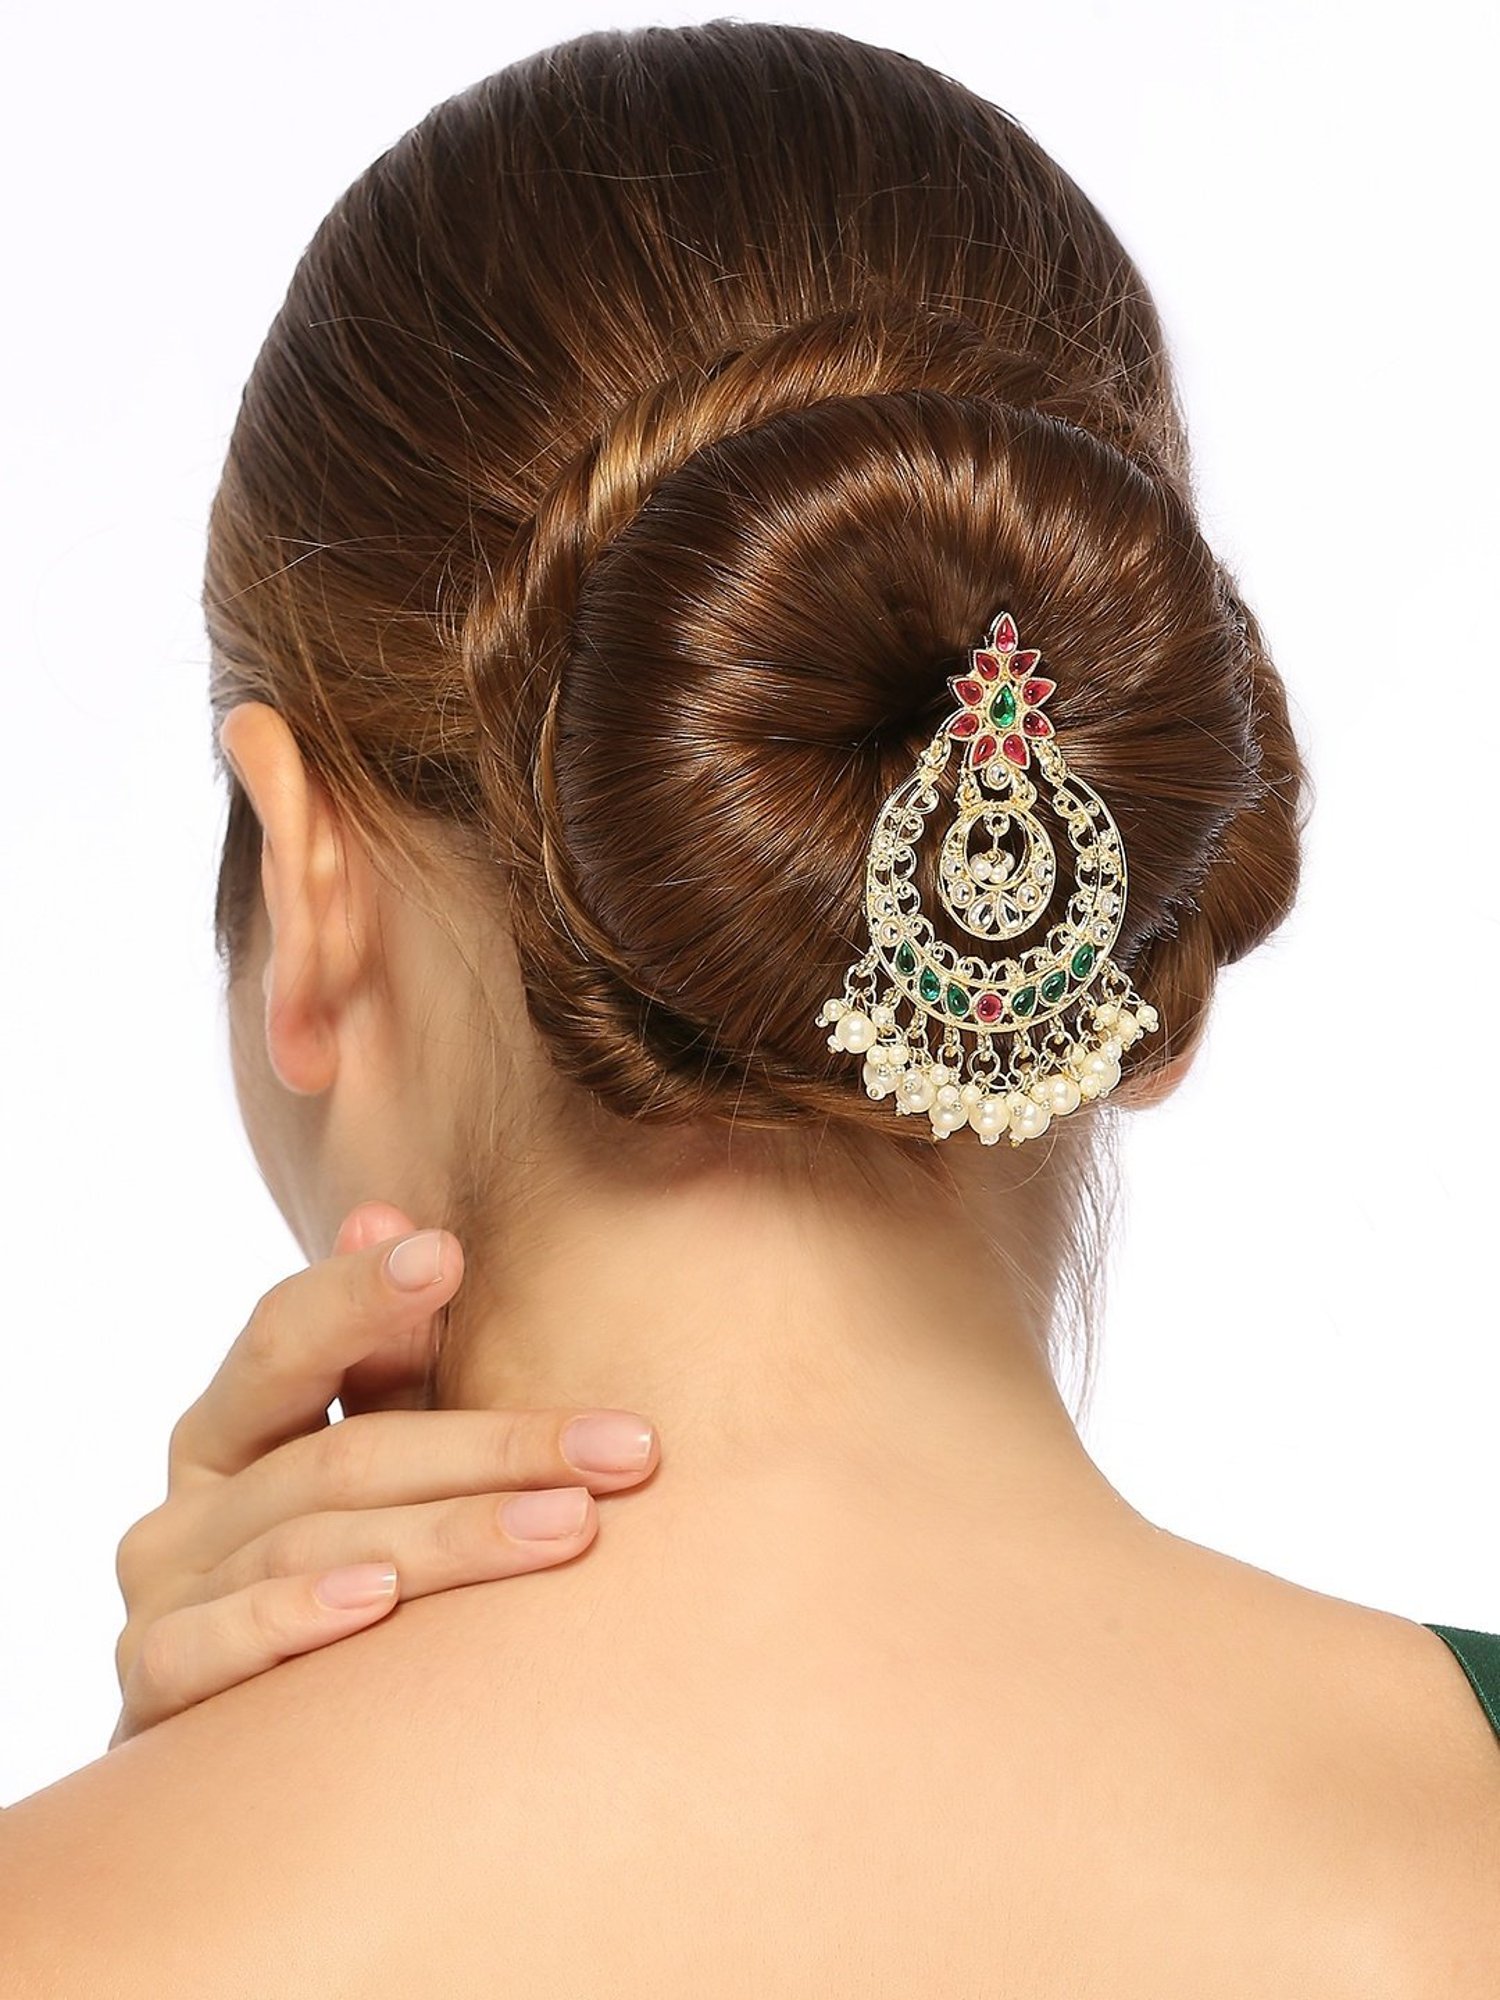 Ananya Panday Vs Alia Bhatt: Who rocks the easy-to-go bun hairstyle?